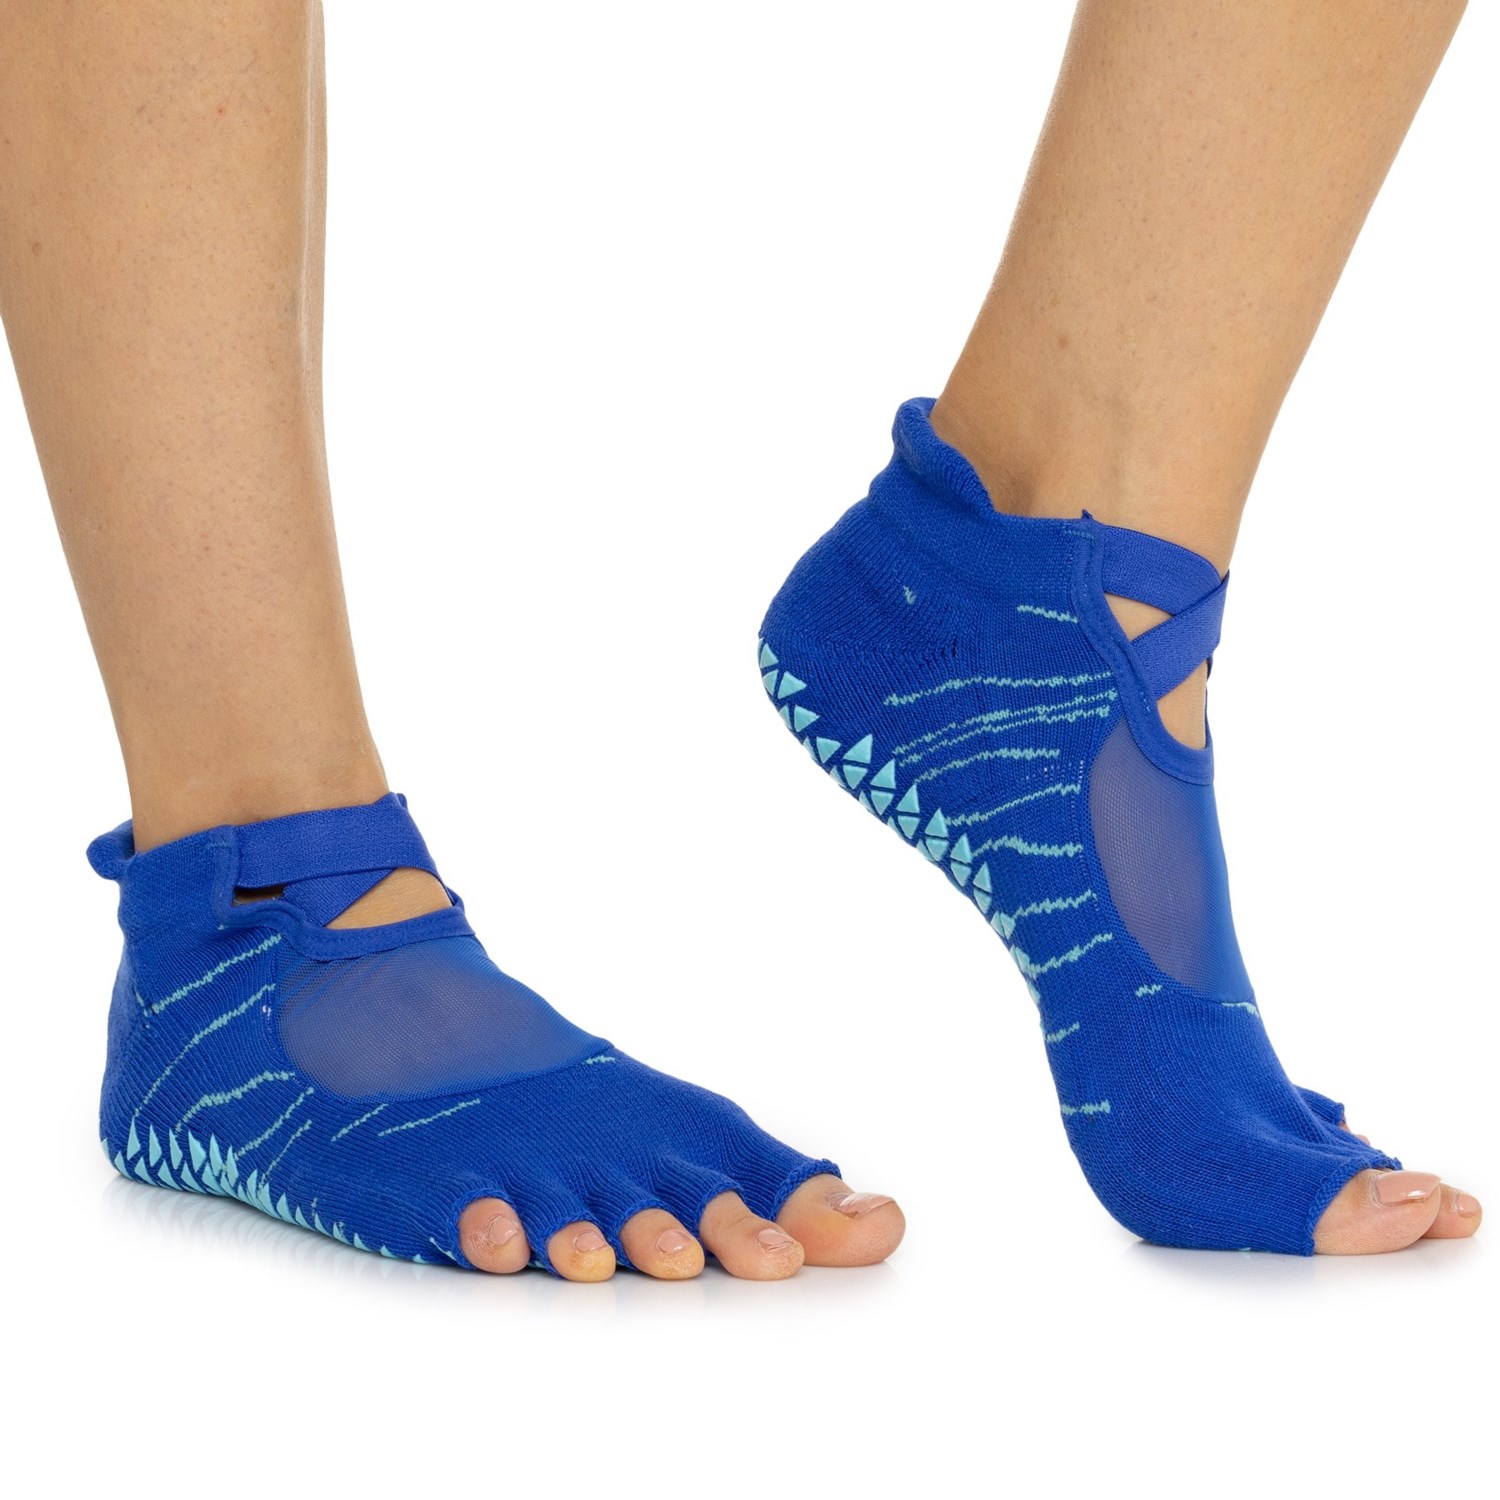 Pointe Studio Grip Socks for Breathable Flexibility